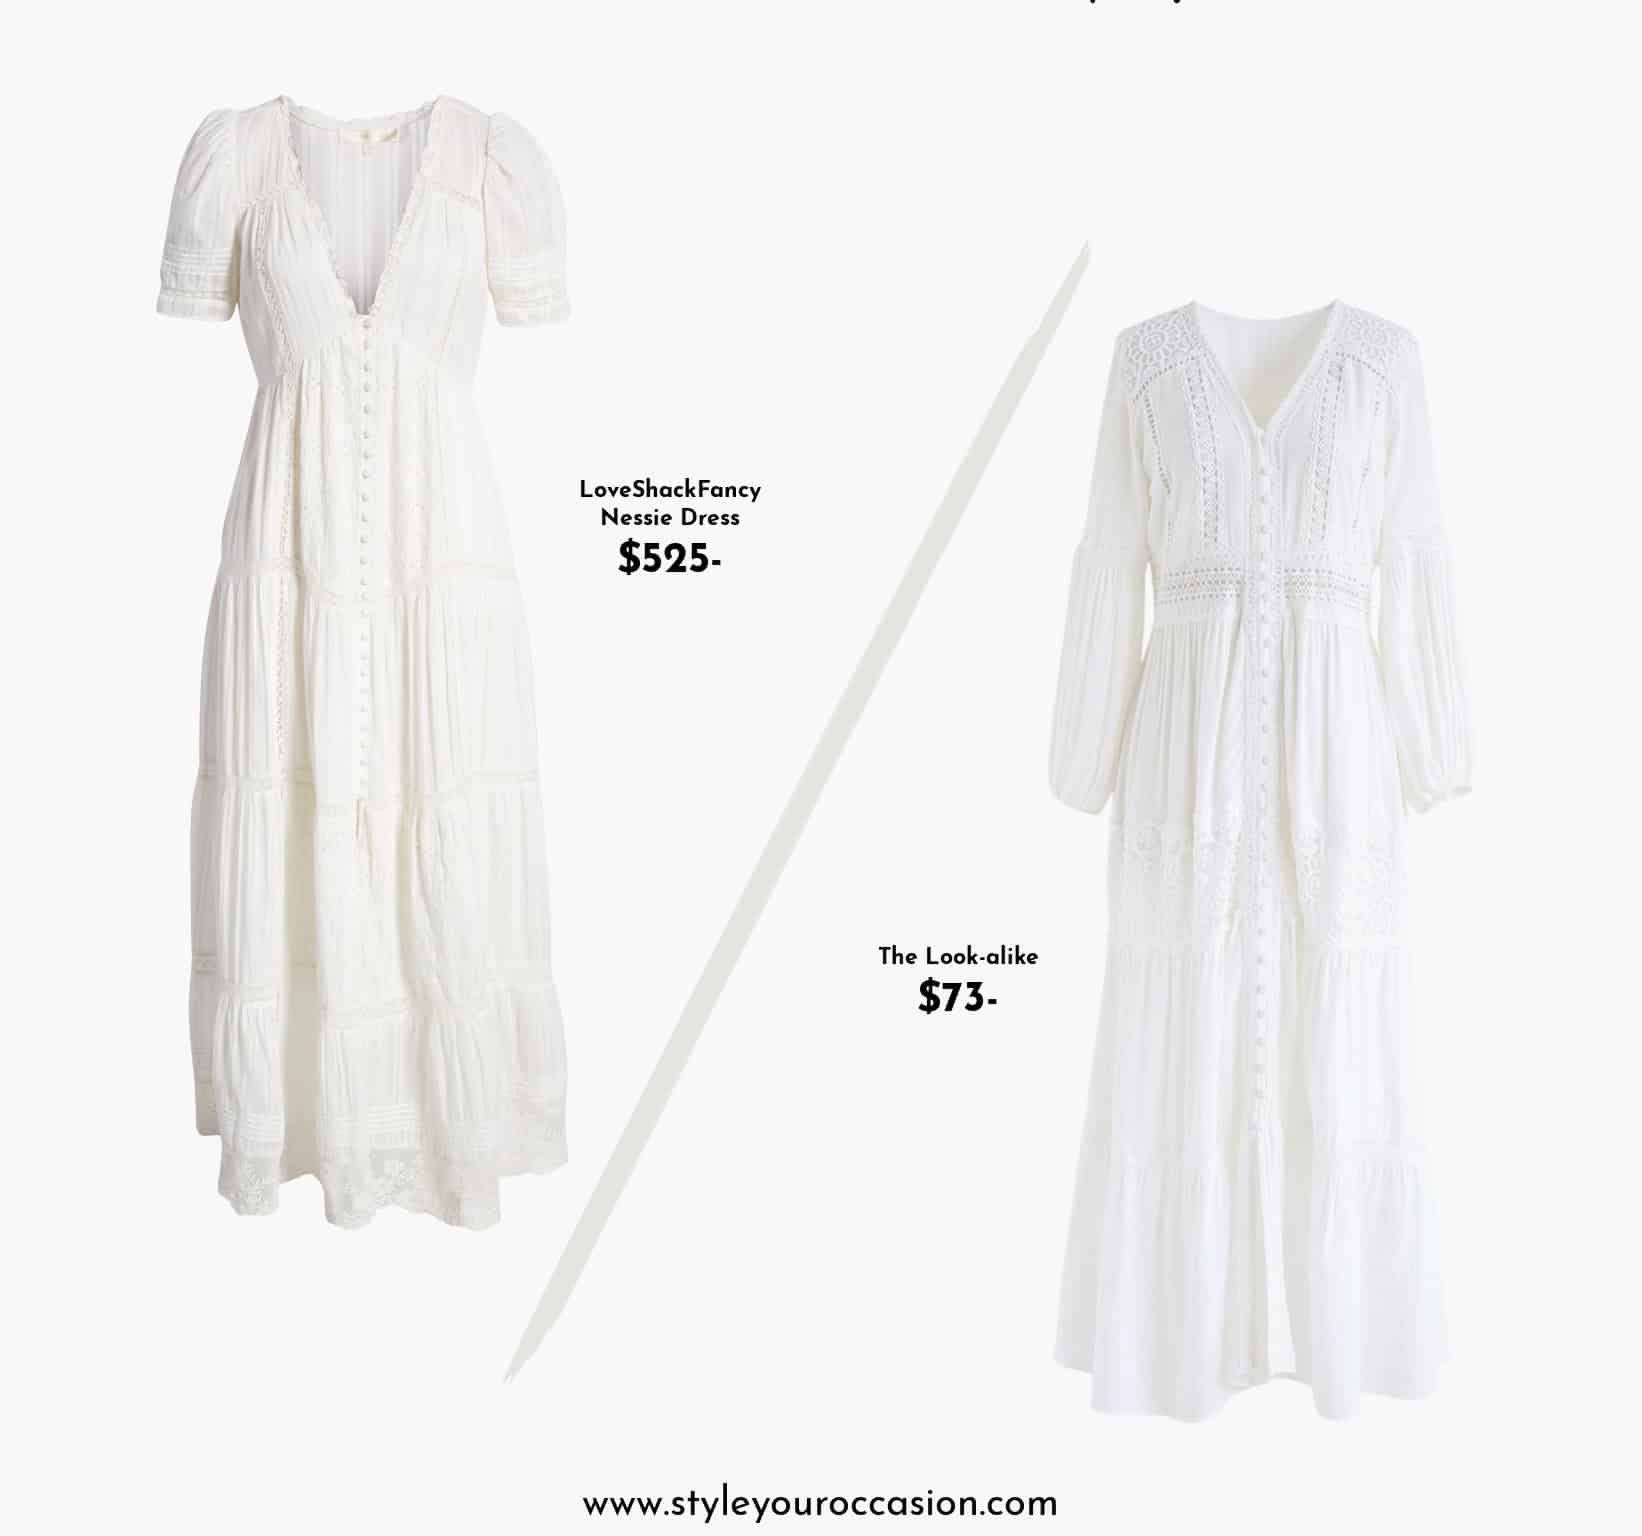 image of two white eyelet maxi dresses that look alike